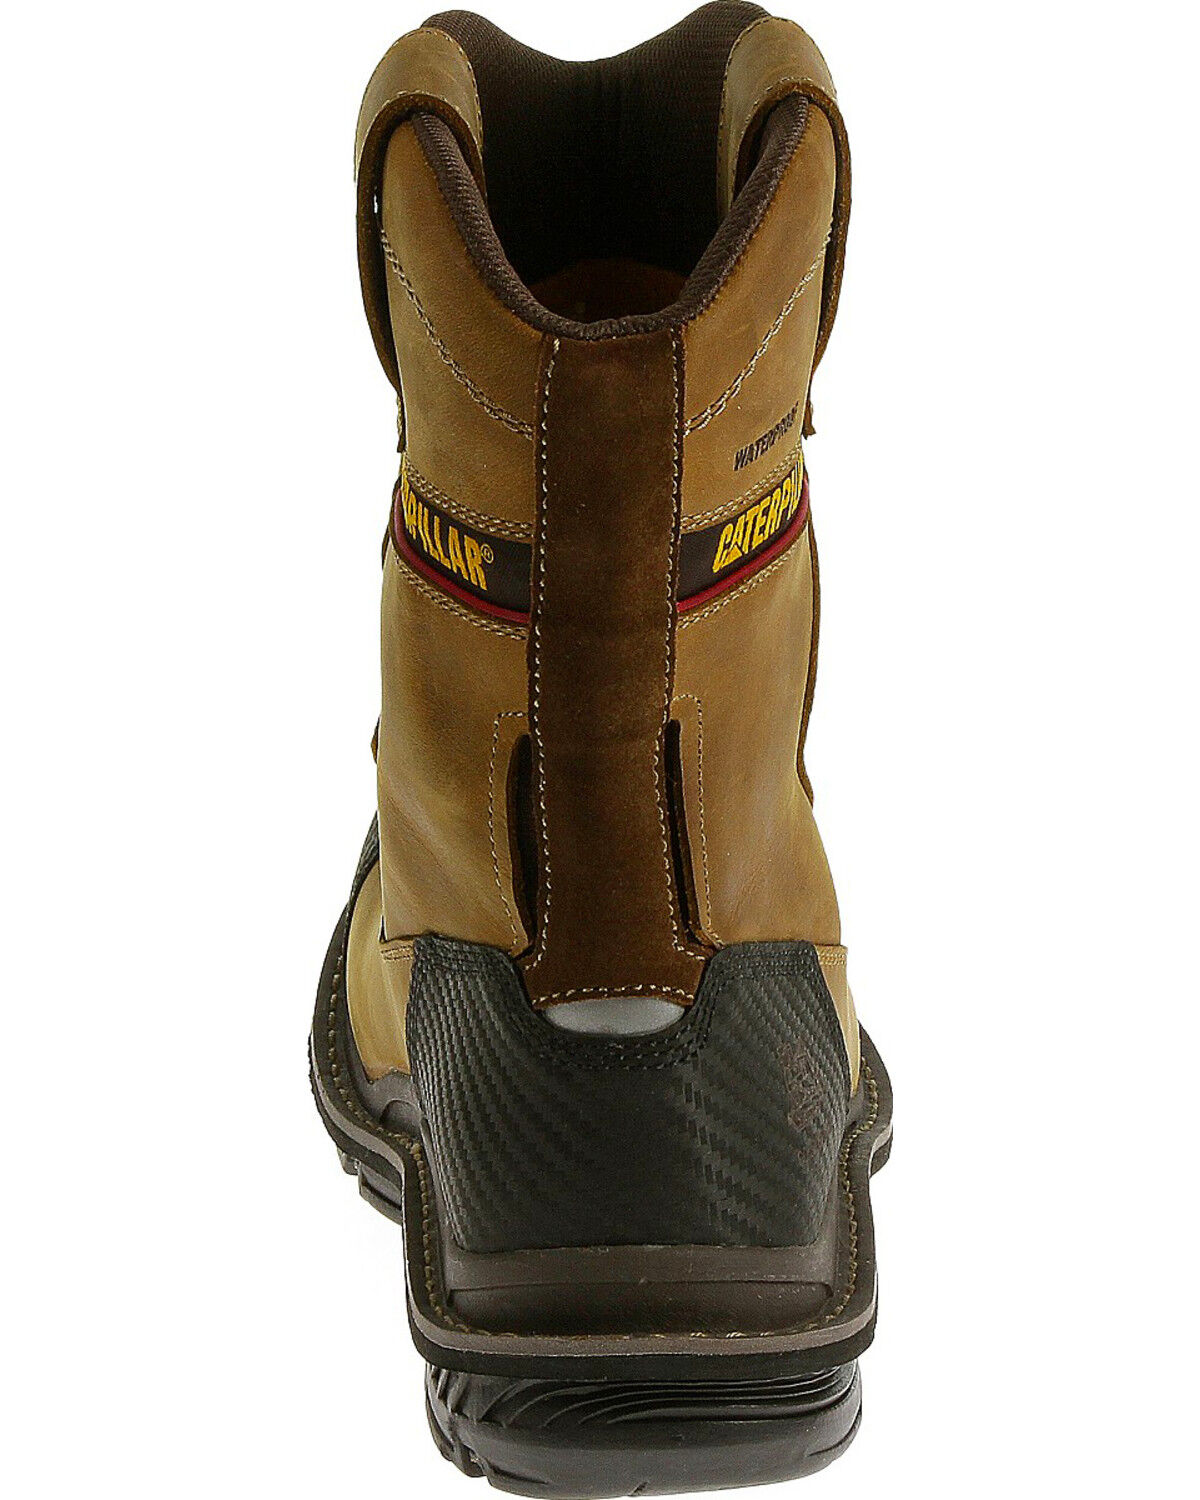 slip on waterproof boots mens